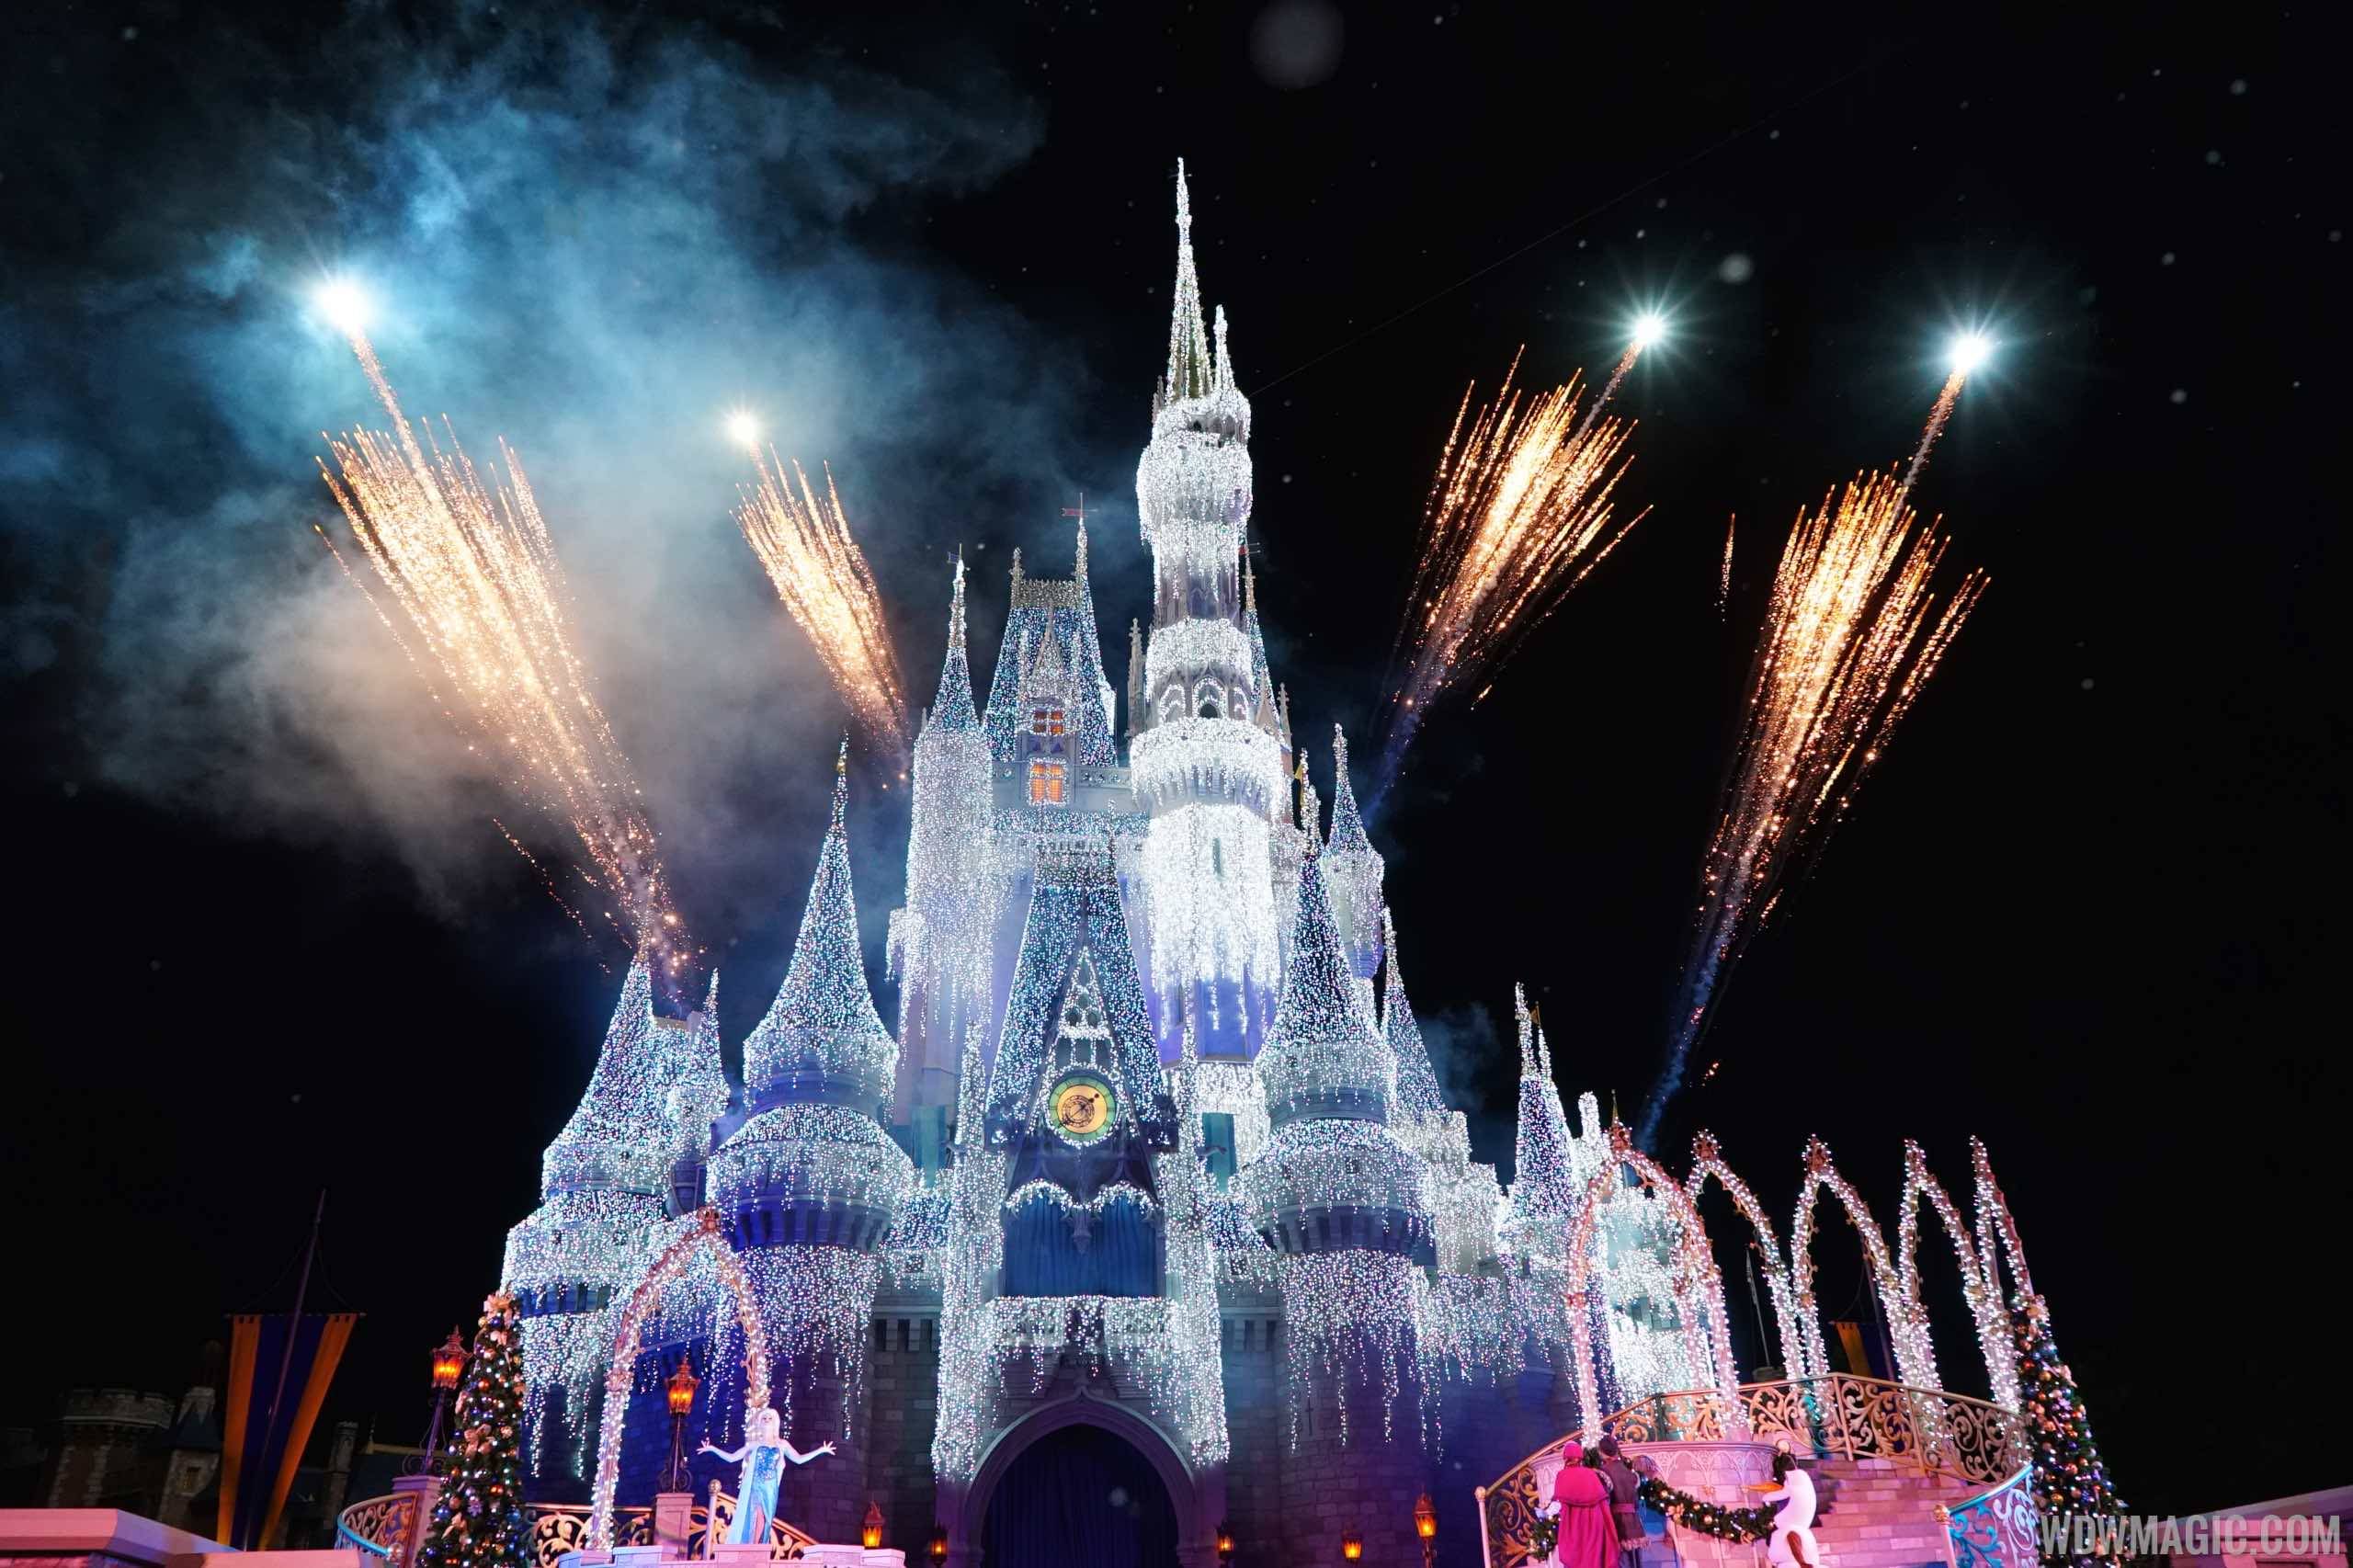 'A Frozen Holiday Wish' returns tomorrow night at the Magic Kingdom